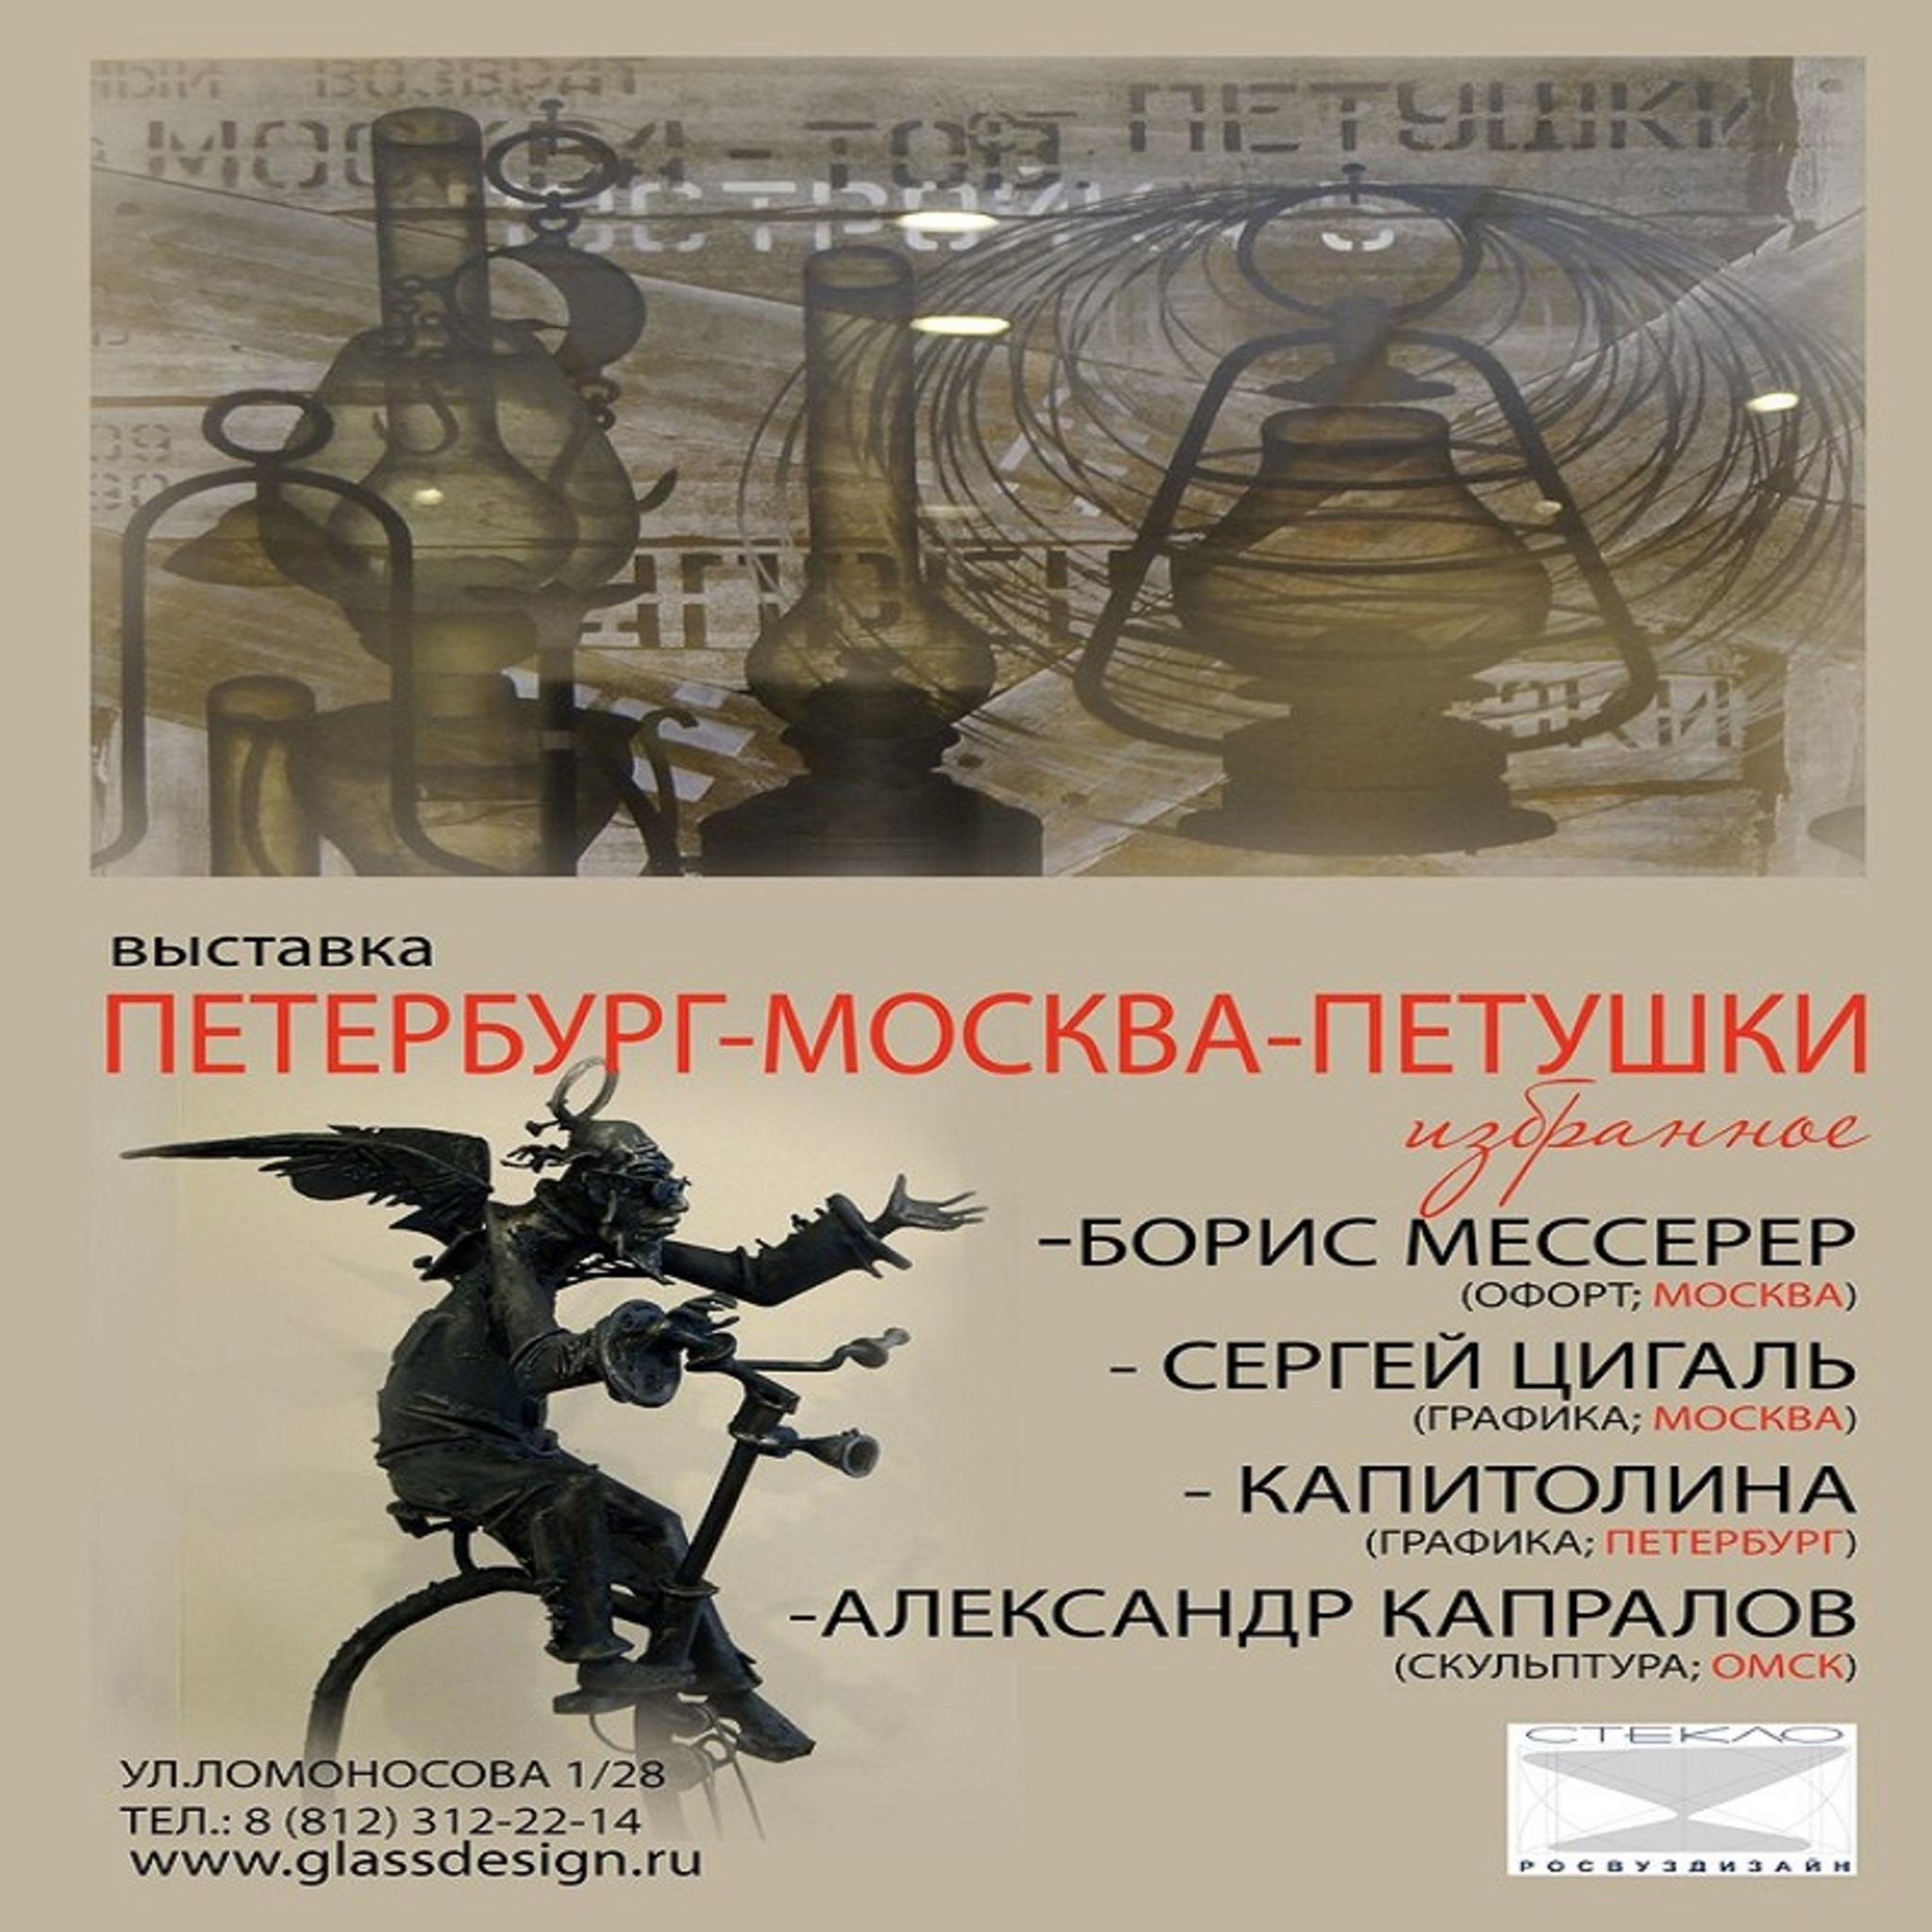 The exhibition Petersburg-Moscow-Petushki. Favorites